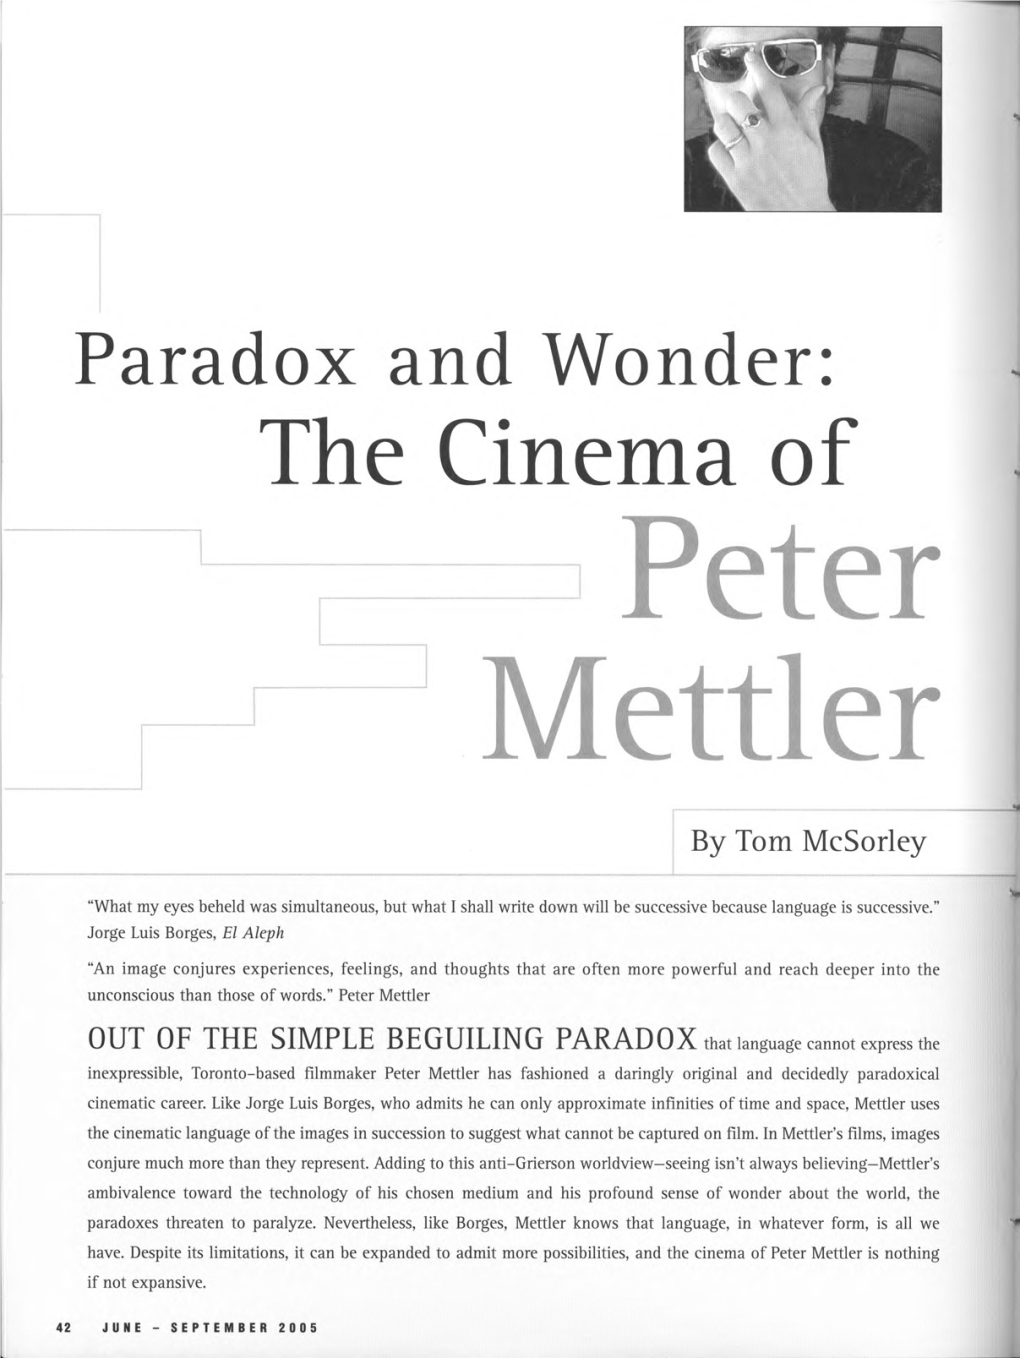 The Cinema of Peter Mettler by Tom Mcsorley